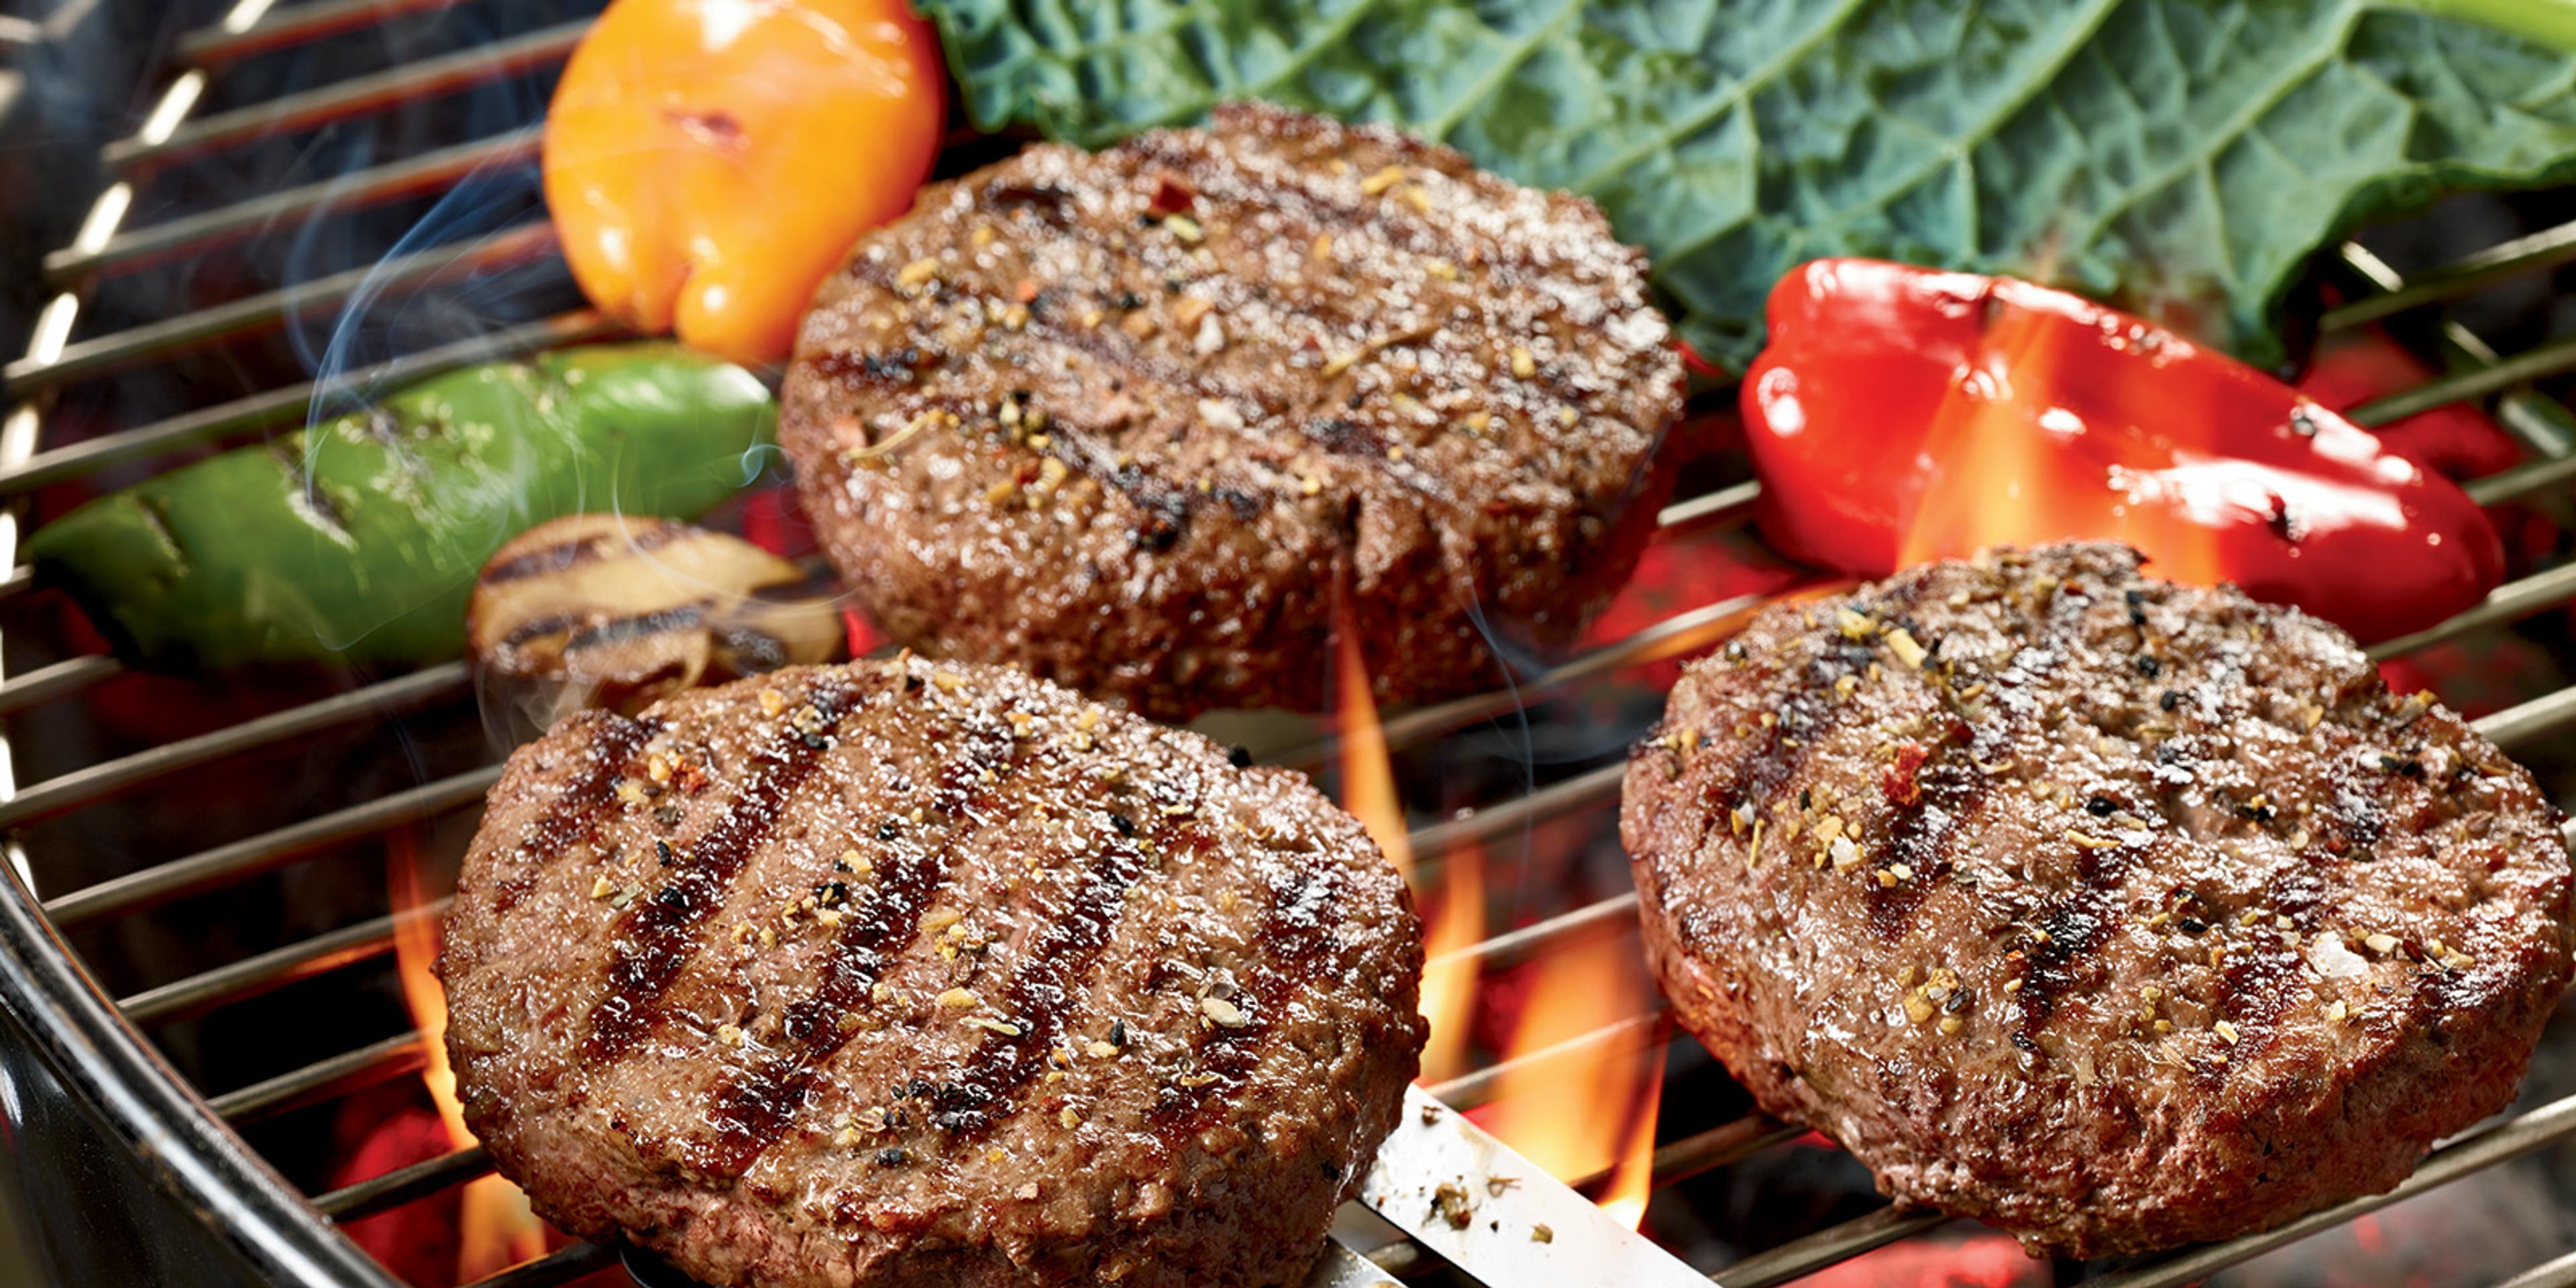 Grass-fed steak burgers from Organic Prairie.